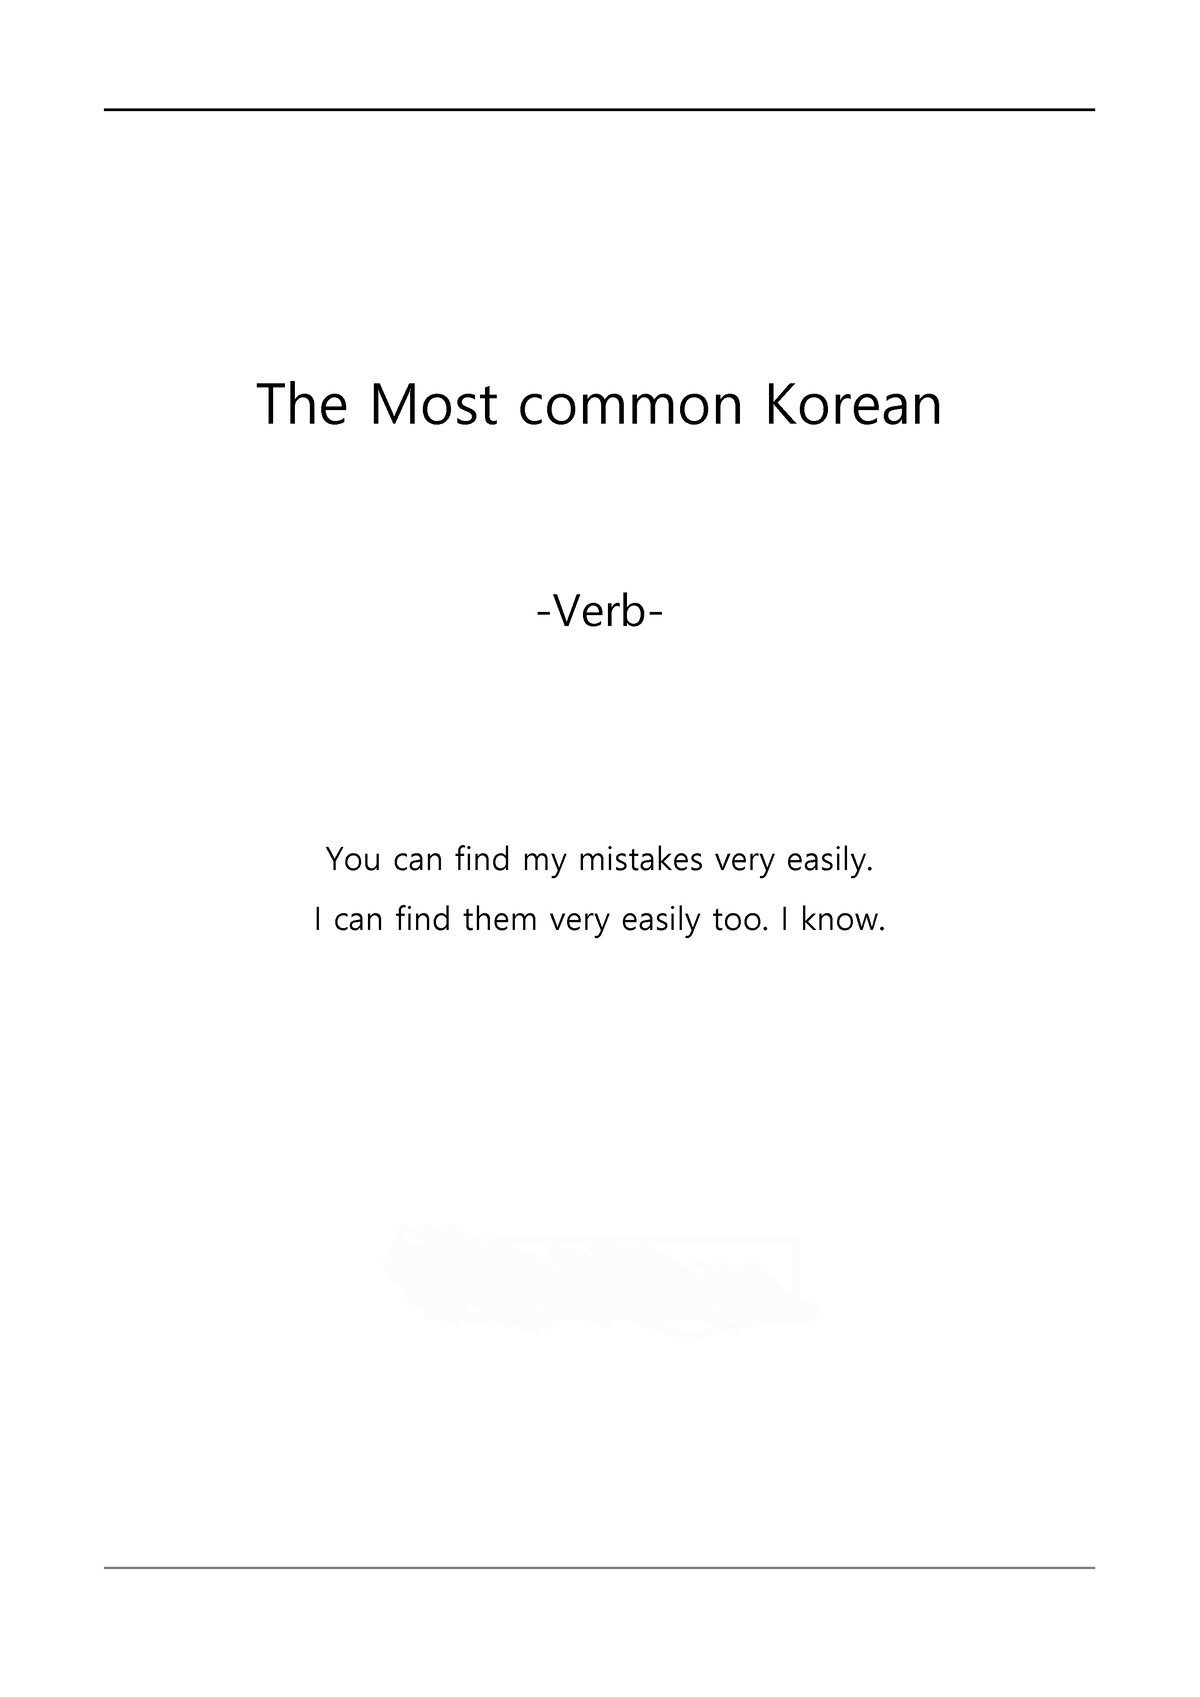 korean-vocabulary-low-intermediate-the-most-common-korean-verb-you